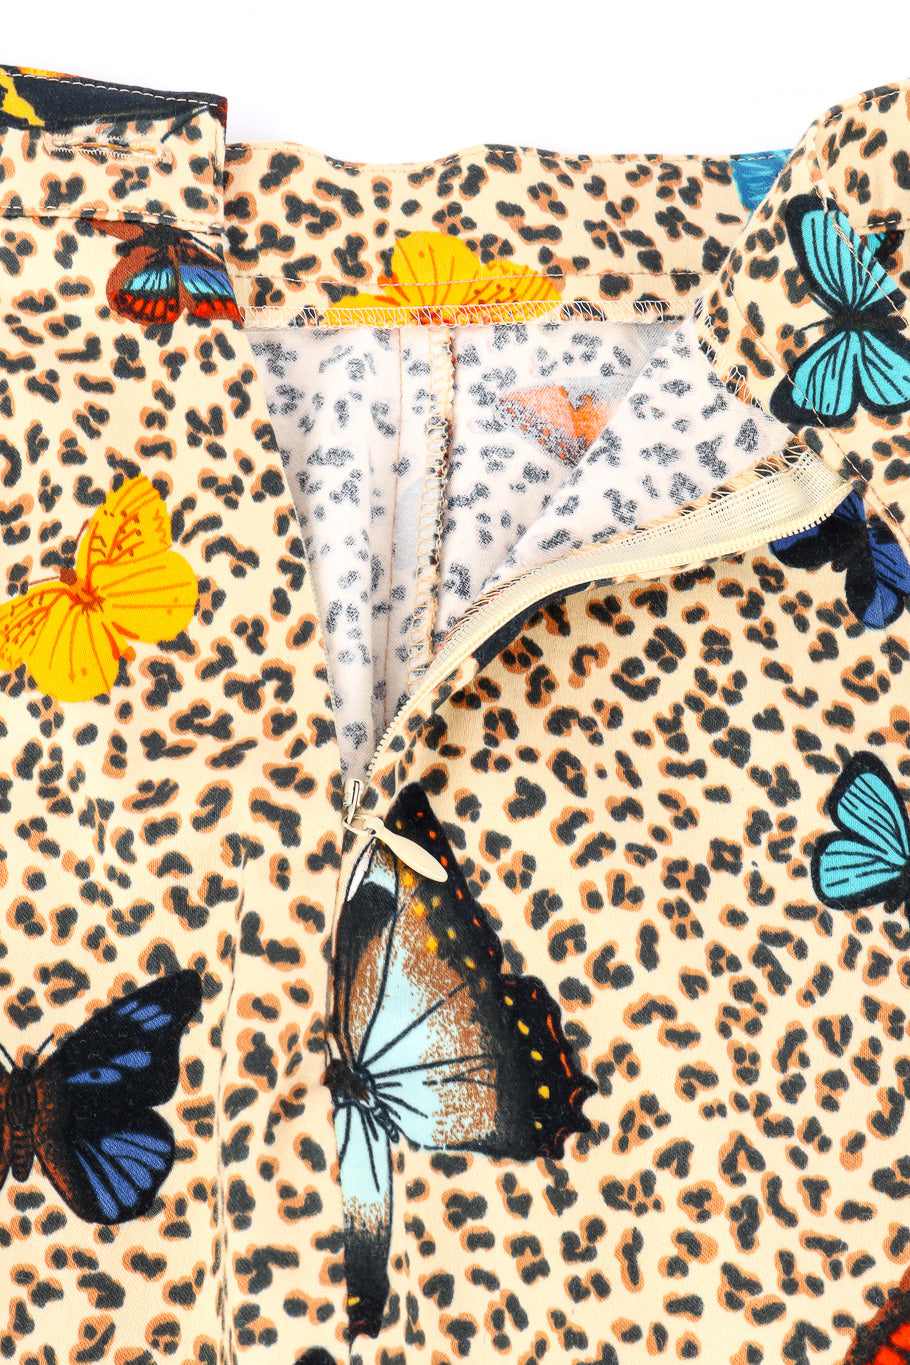 Butterfly jacket and skirt set by Kenzo flat lay skirt zipper @recessla